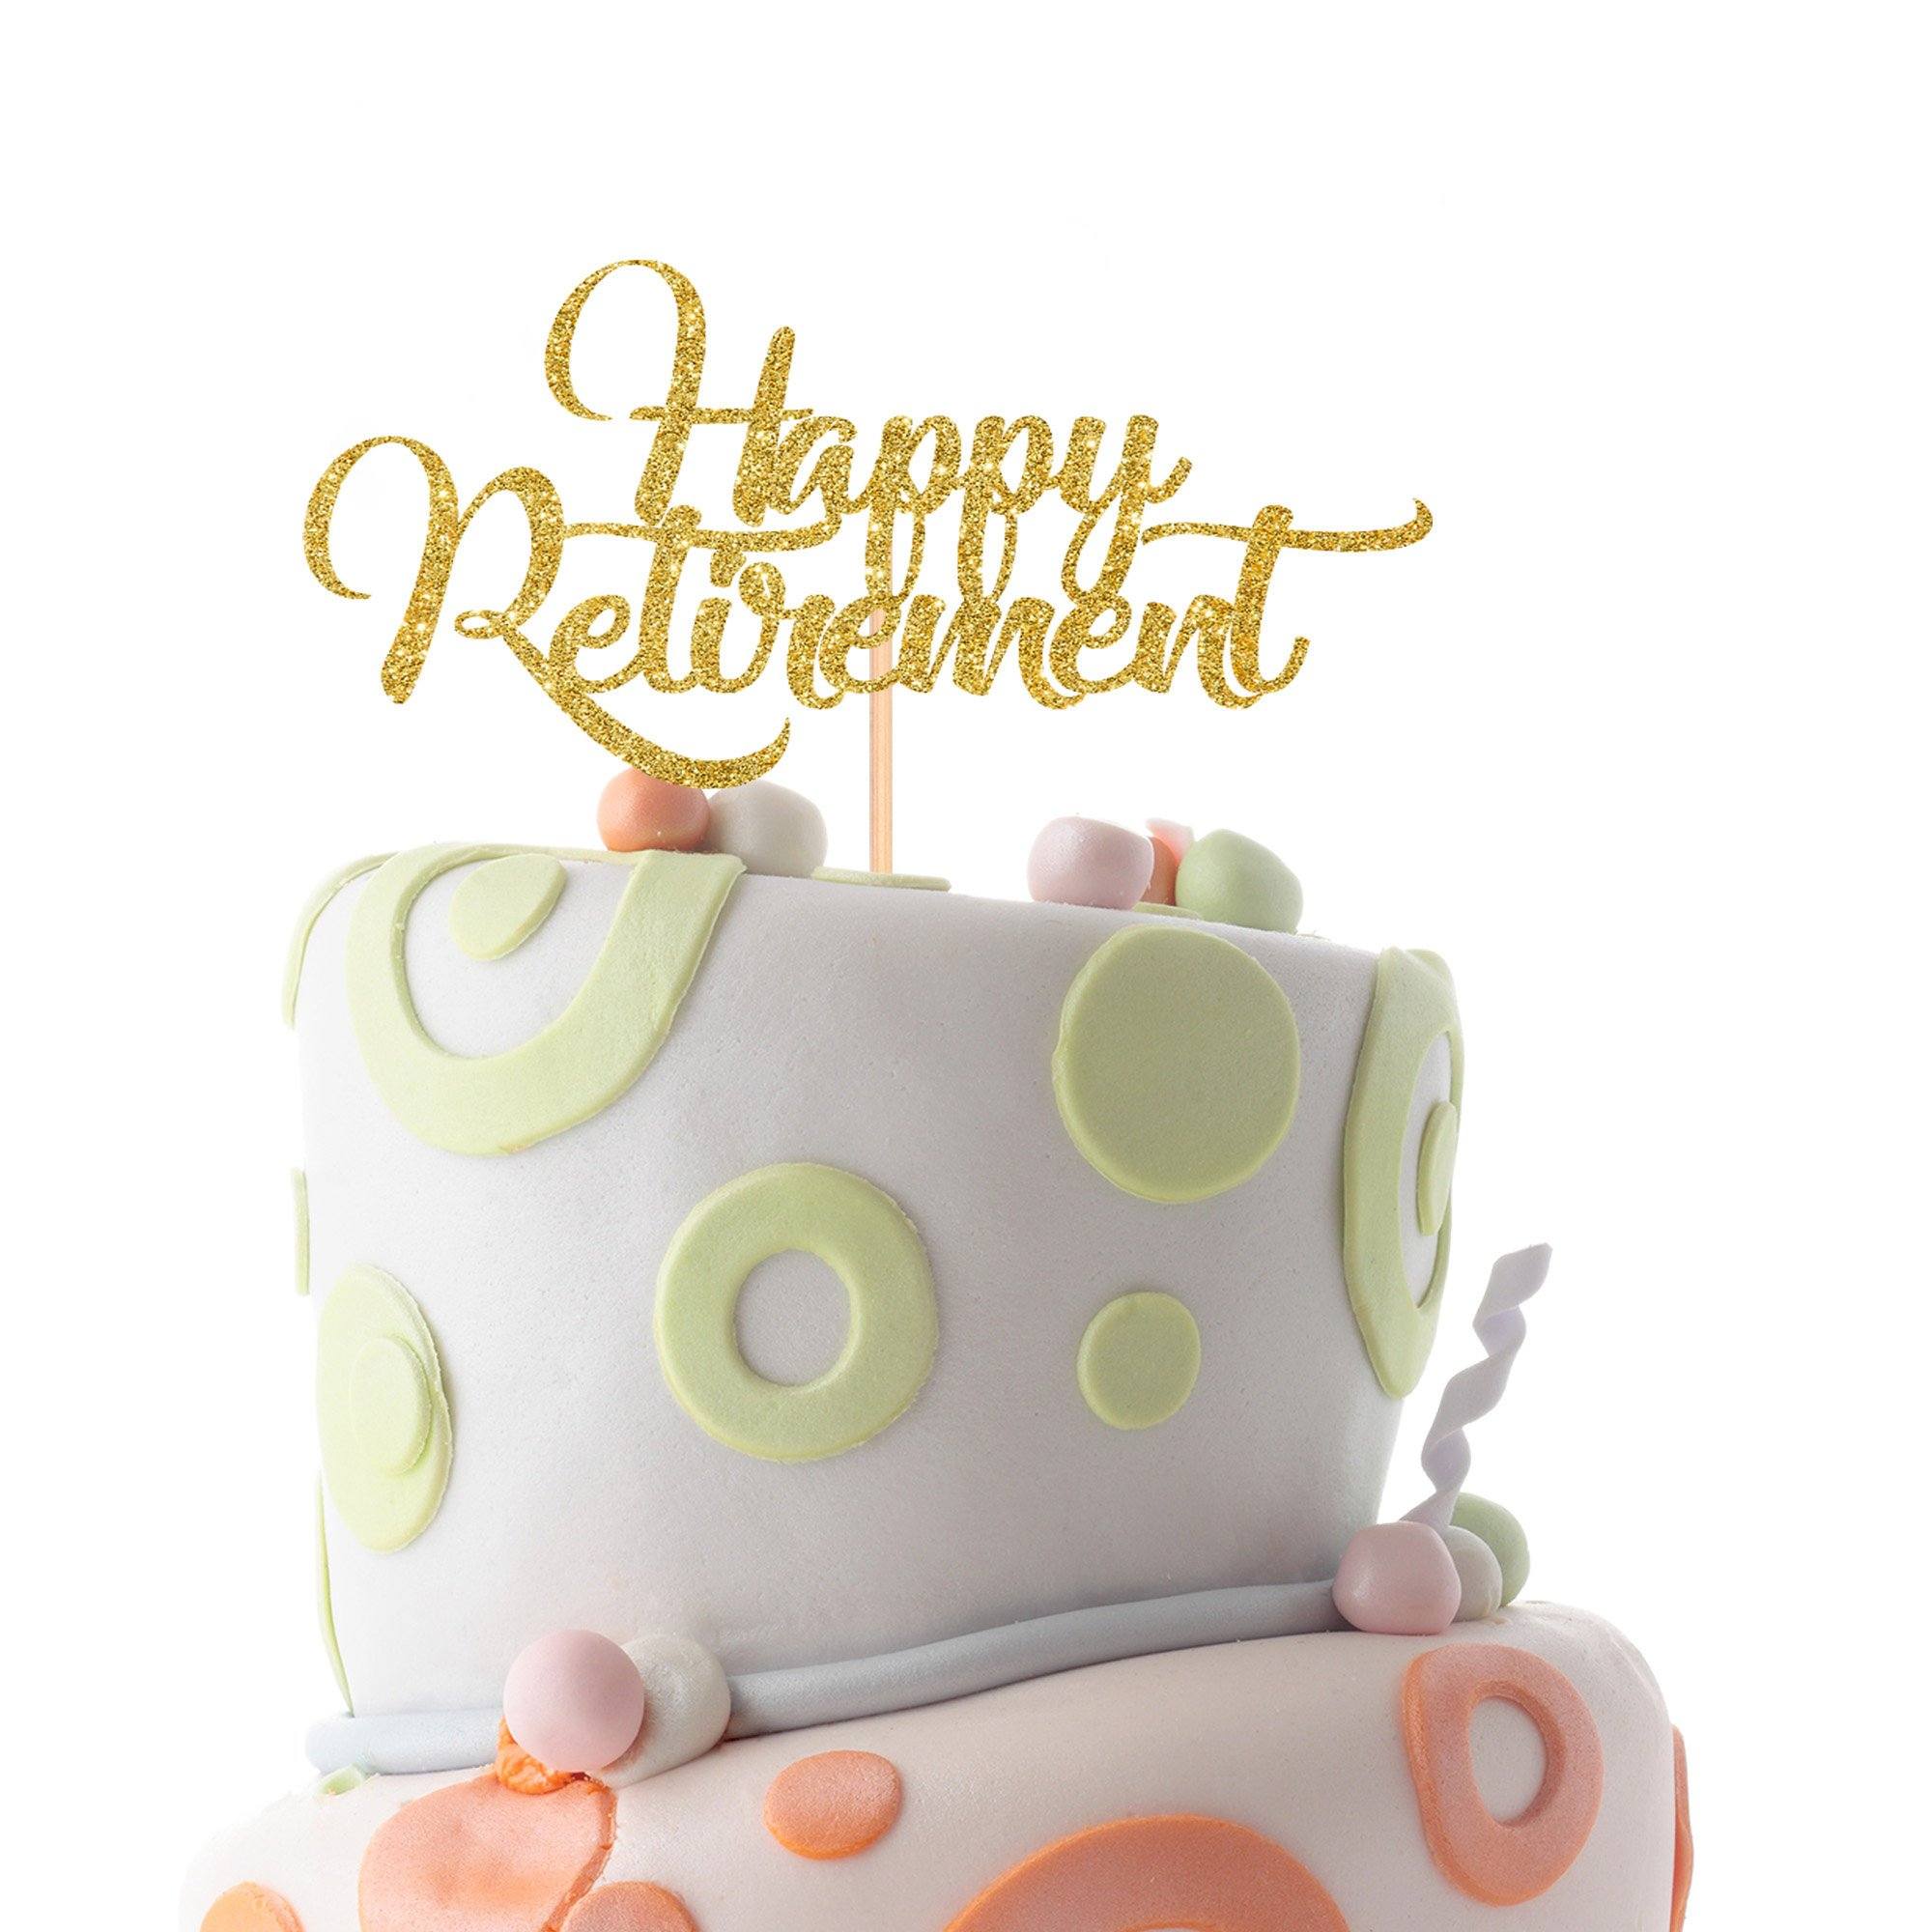 Happy retirement cake topper. Retirement cake topper decorations